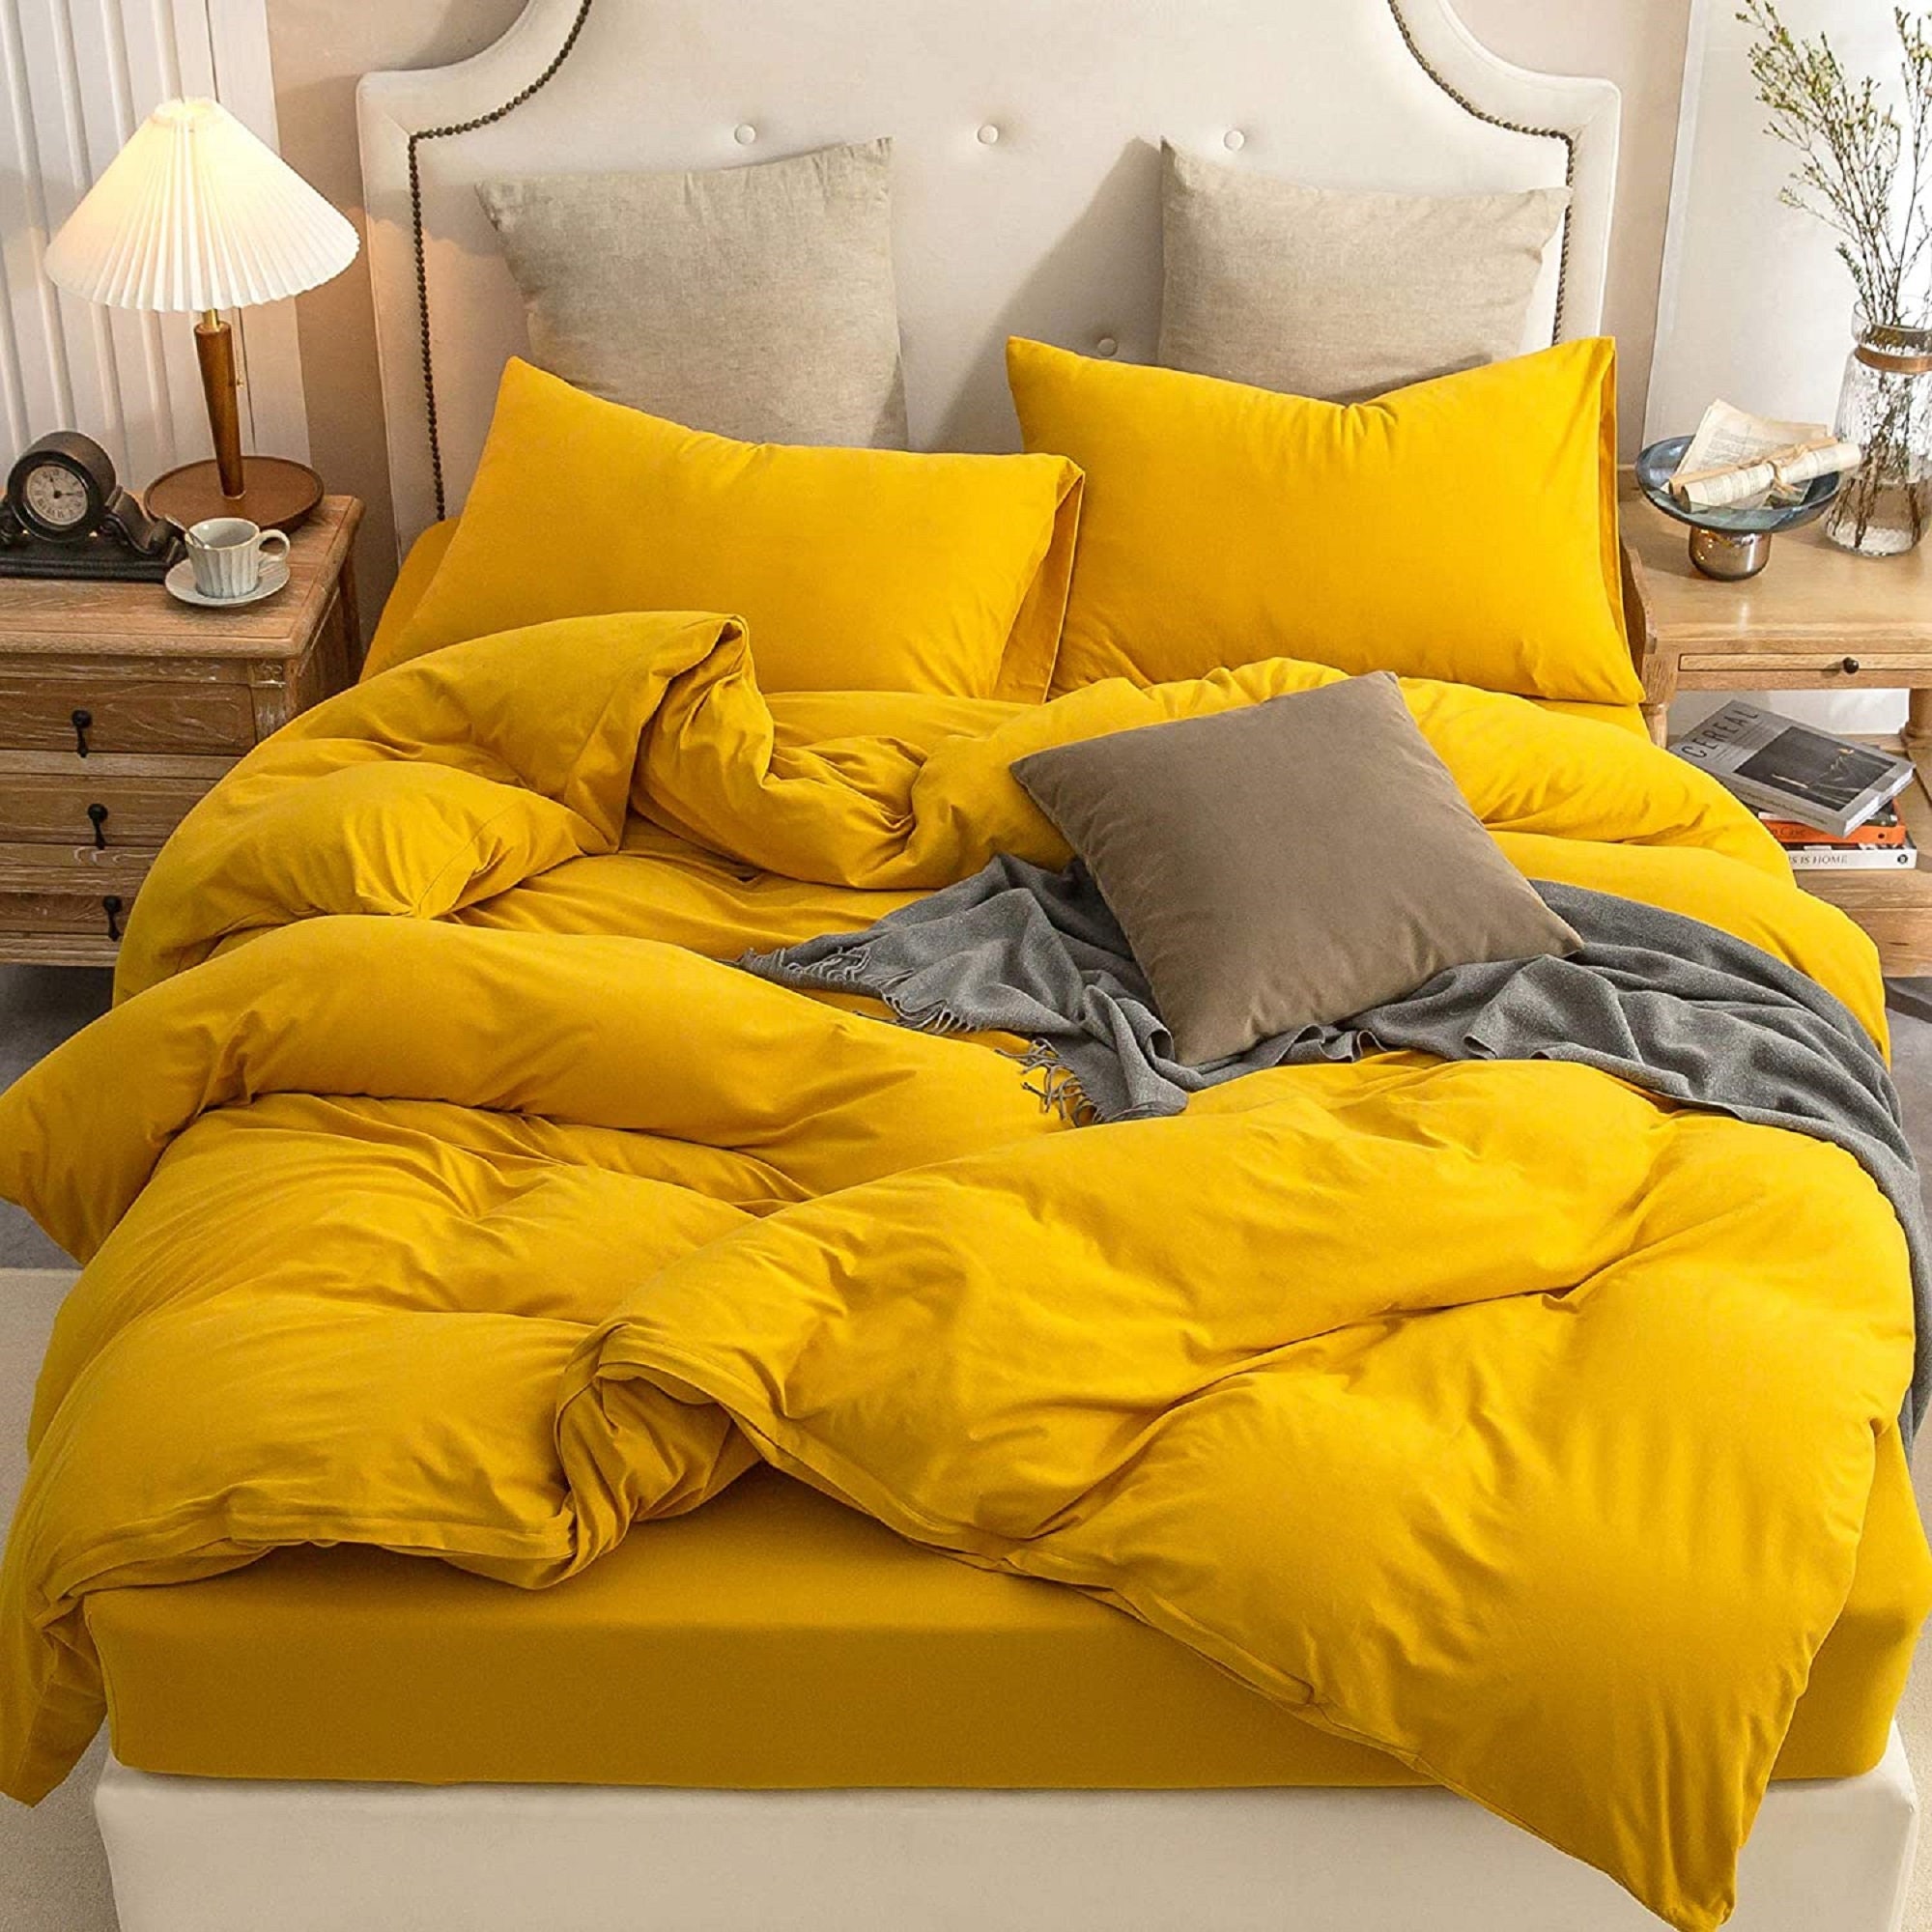 Golden Rang Duvet Quilt Cover with Pillow Cases Cotton Rich Bedding Sets 